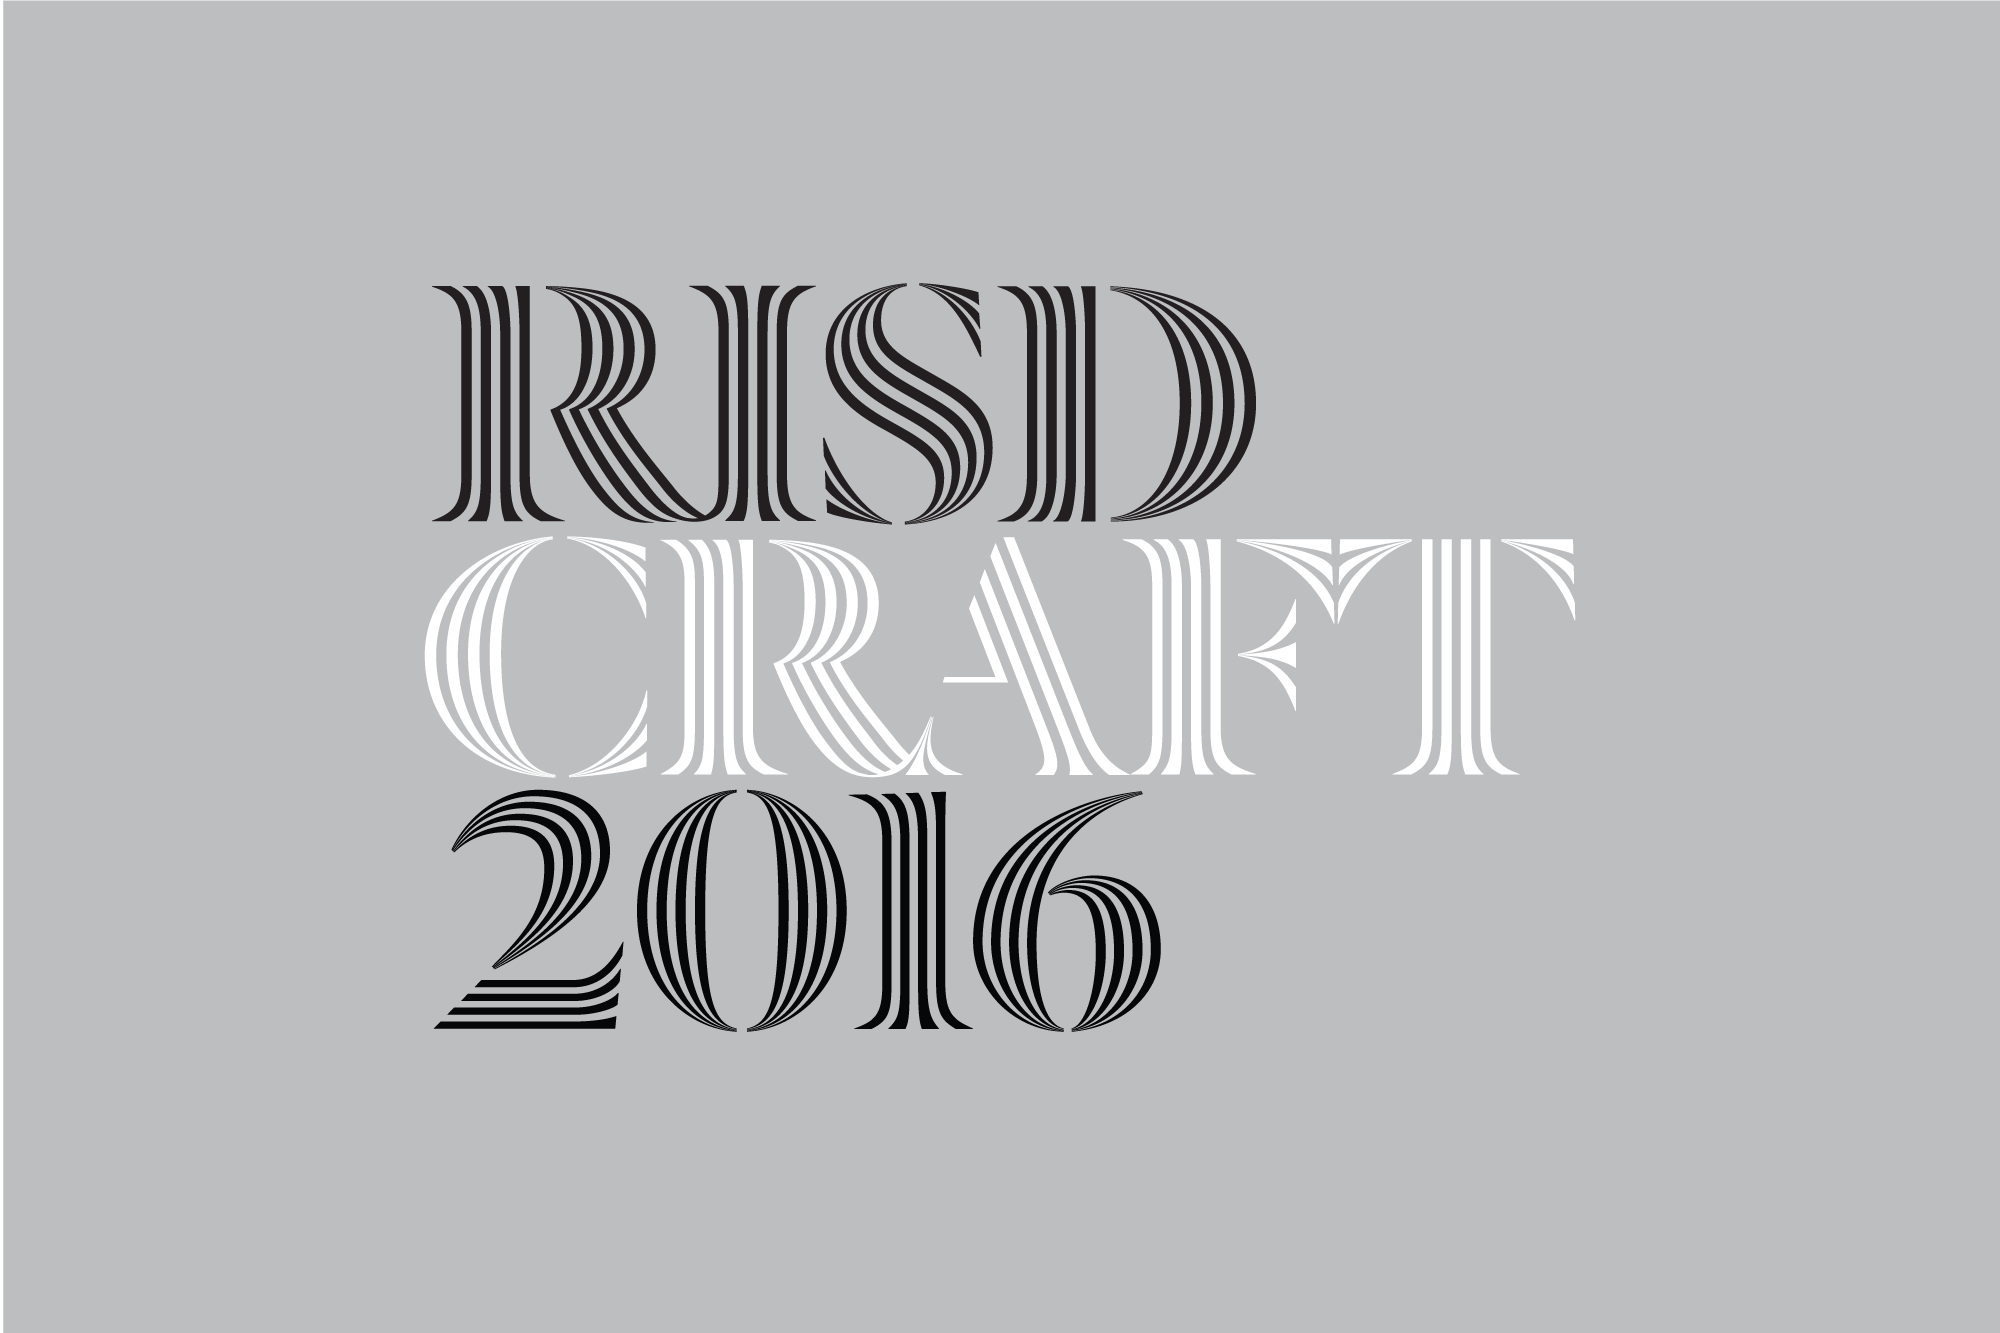 RISD Craft Logo Lockup